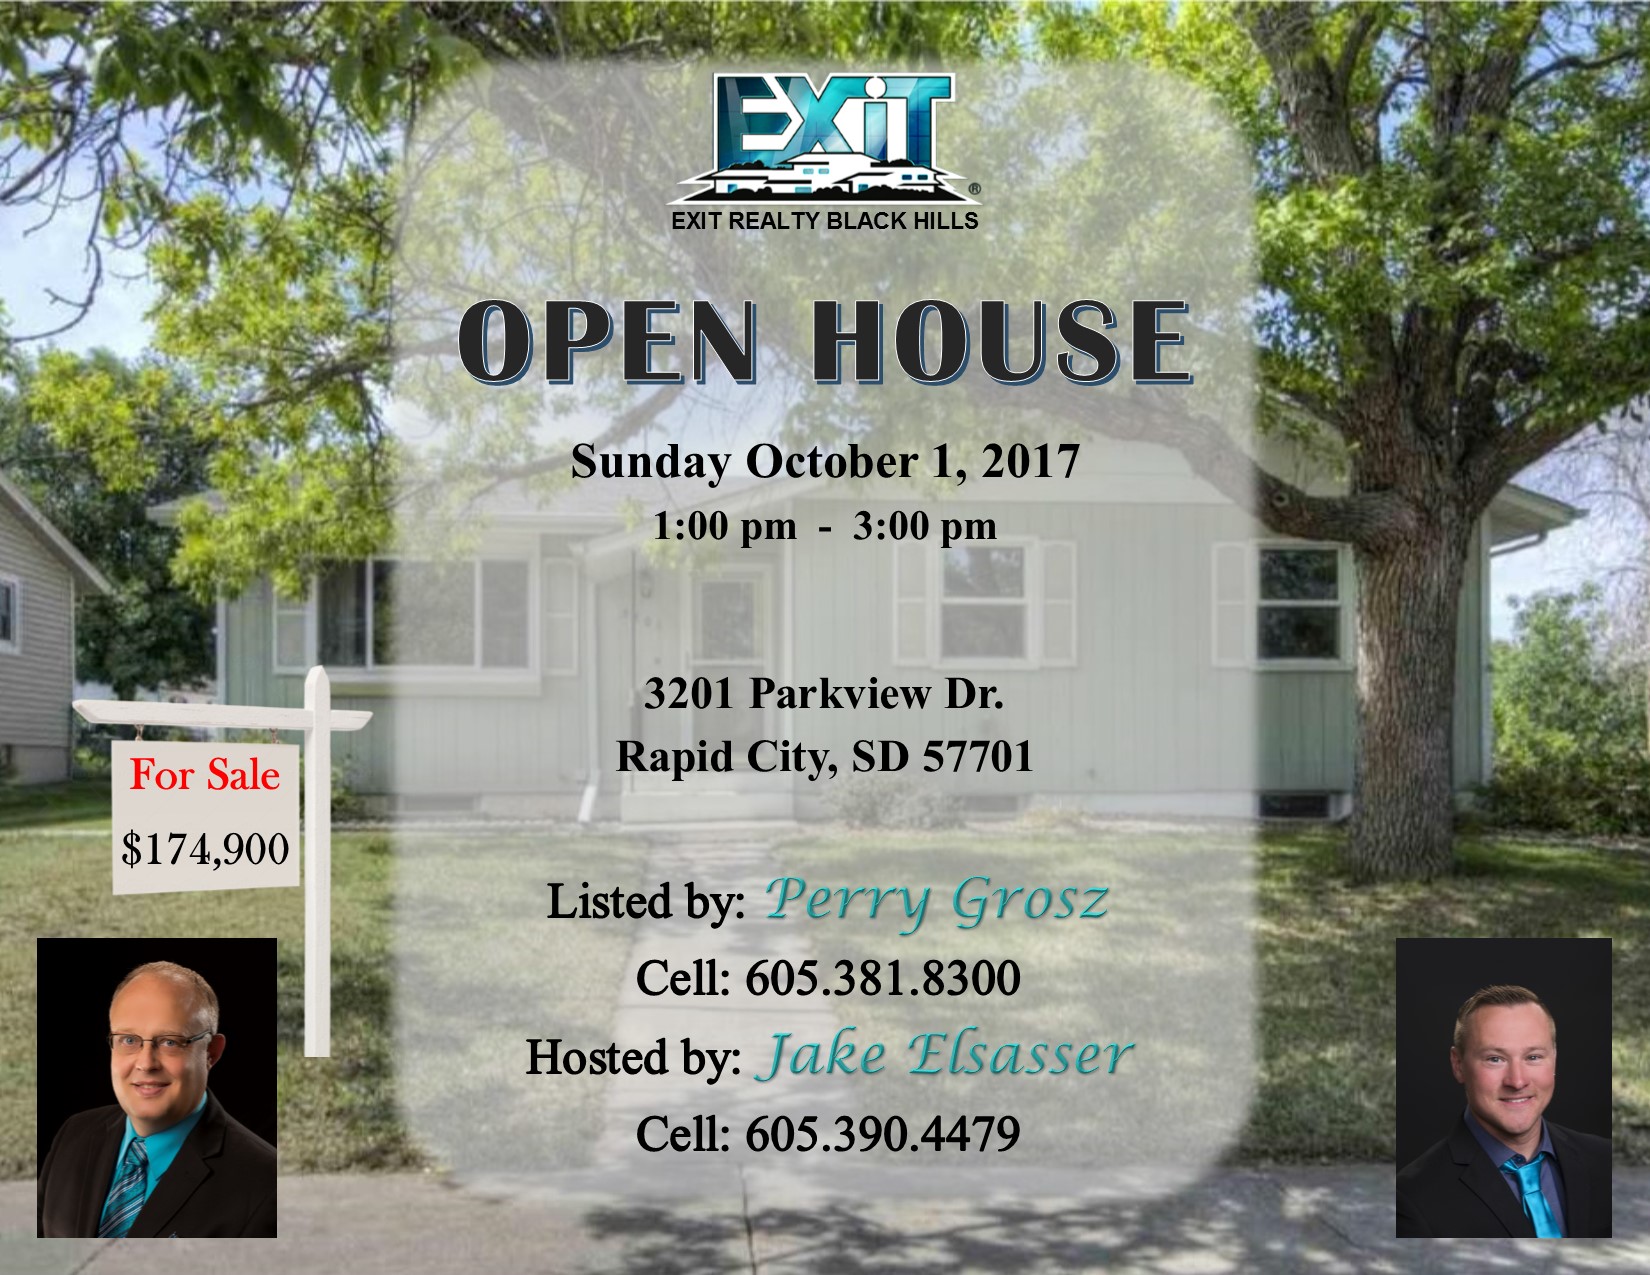 OPEN HOUSE Sunday October 1, 2017